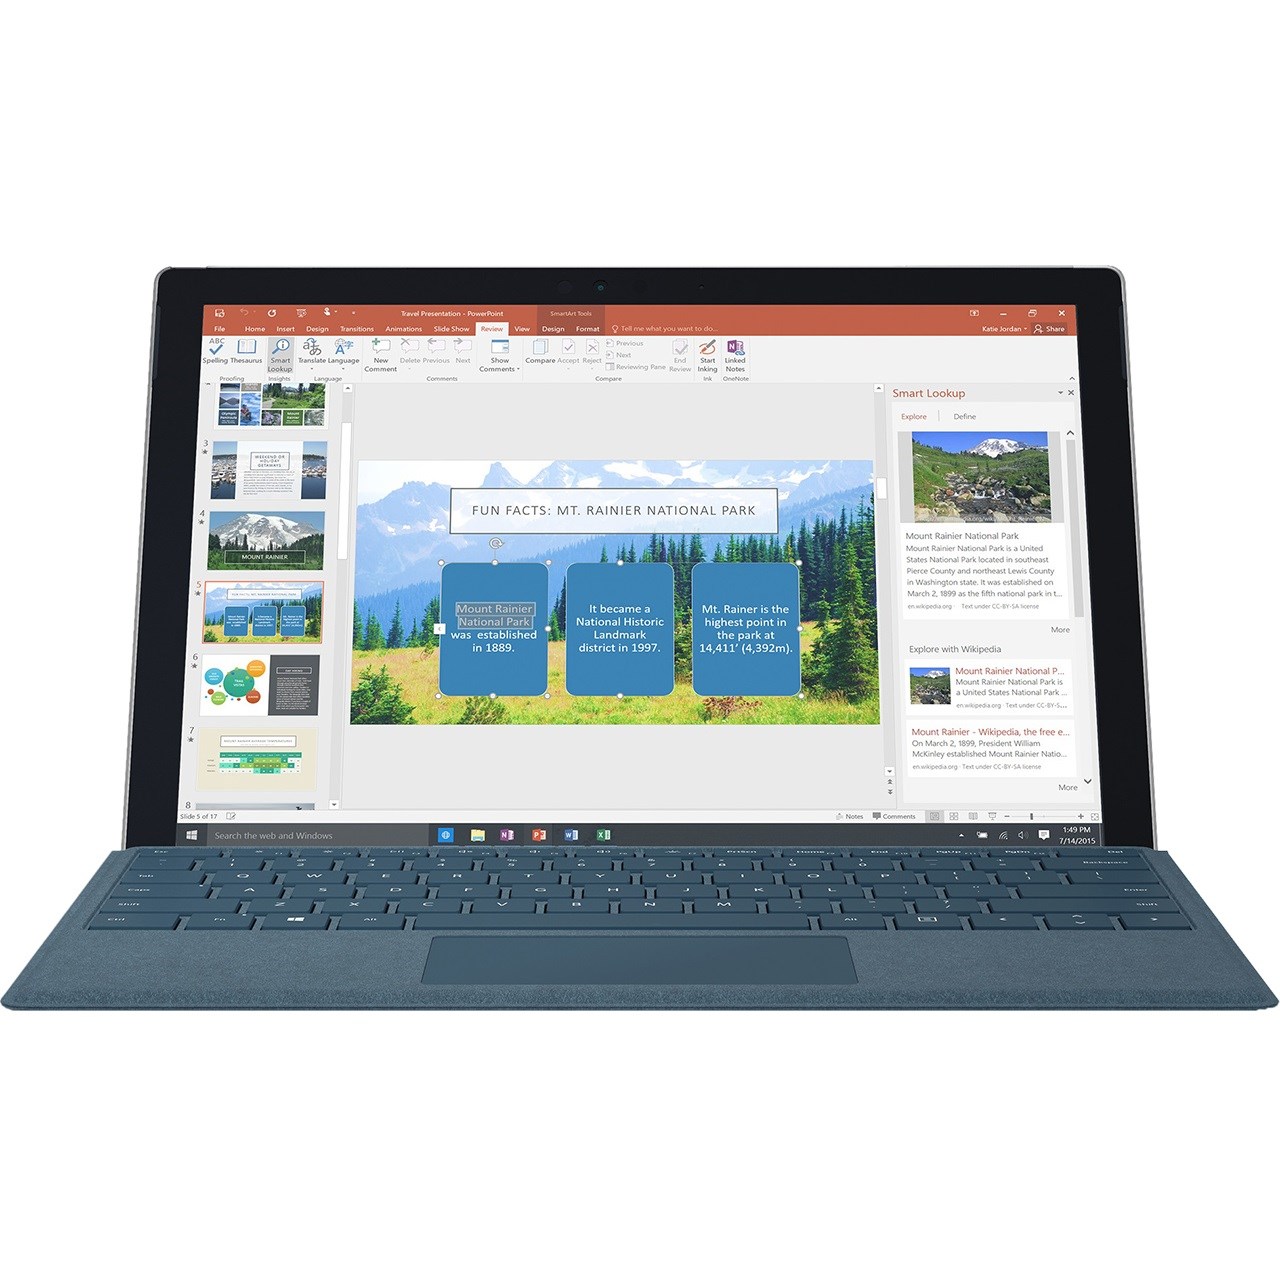 تبلت مایکروسافت مدل Surface Pro 2017 - D به همراه کیبورد سیگنیچر رنگ آبی کبالت و کیف چرم صنوبر  - ظرفیت 256 گیگابایت